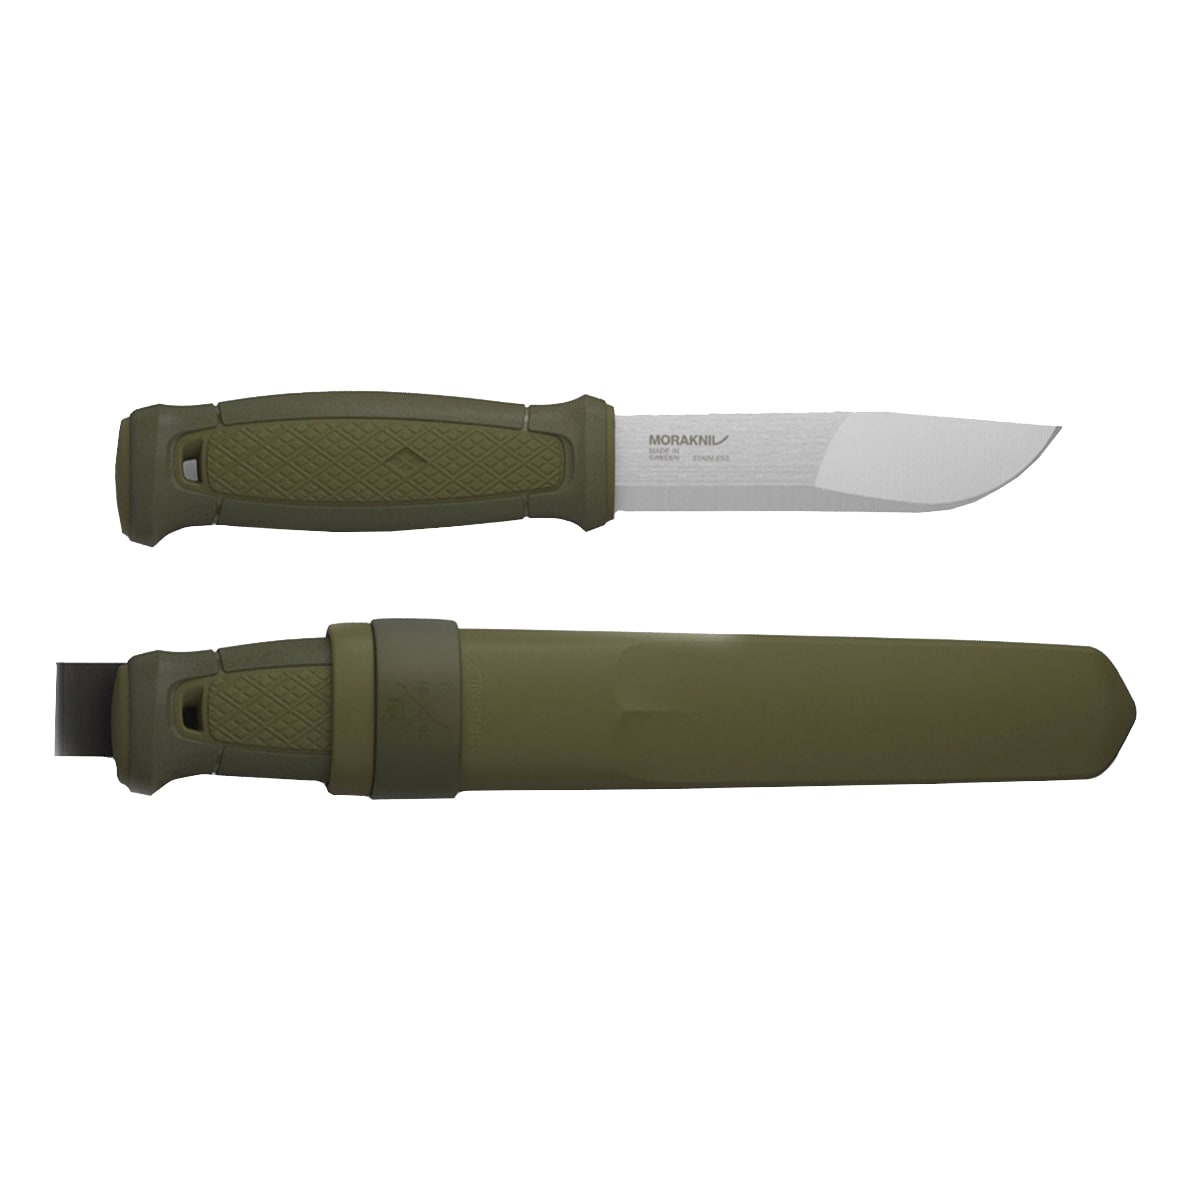 Morakniv Kansbol Fixed Blade Knife - Green